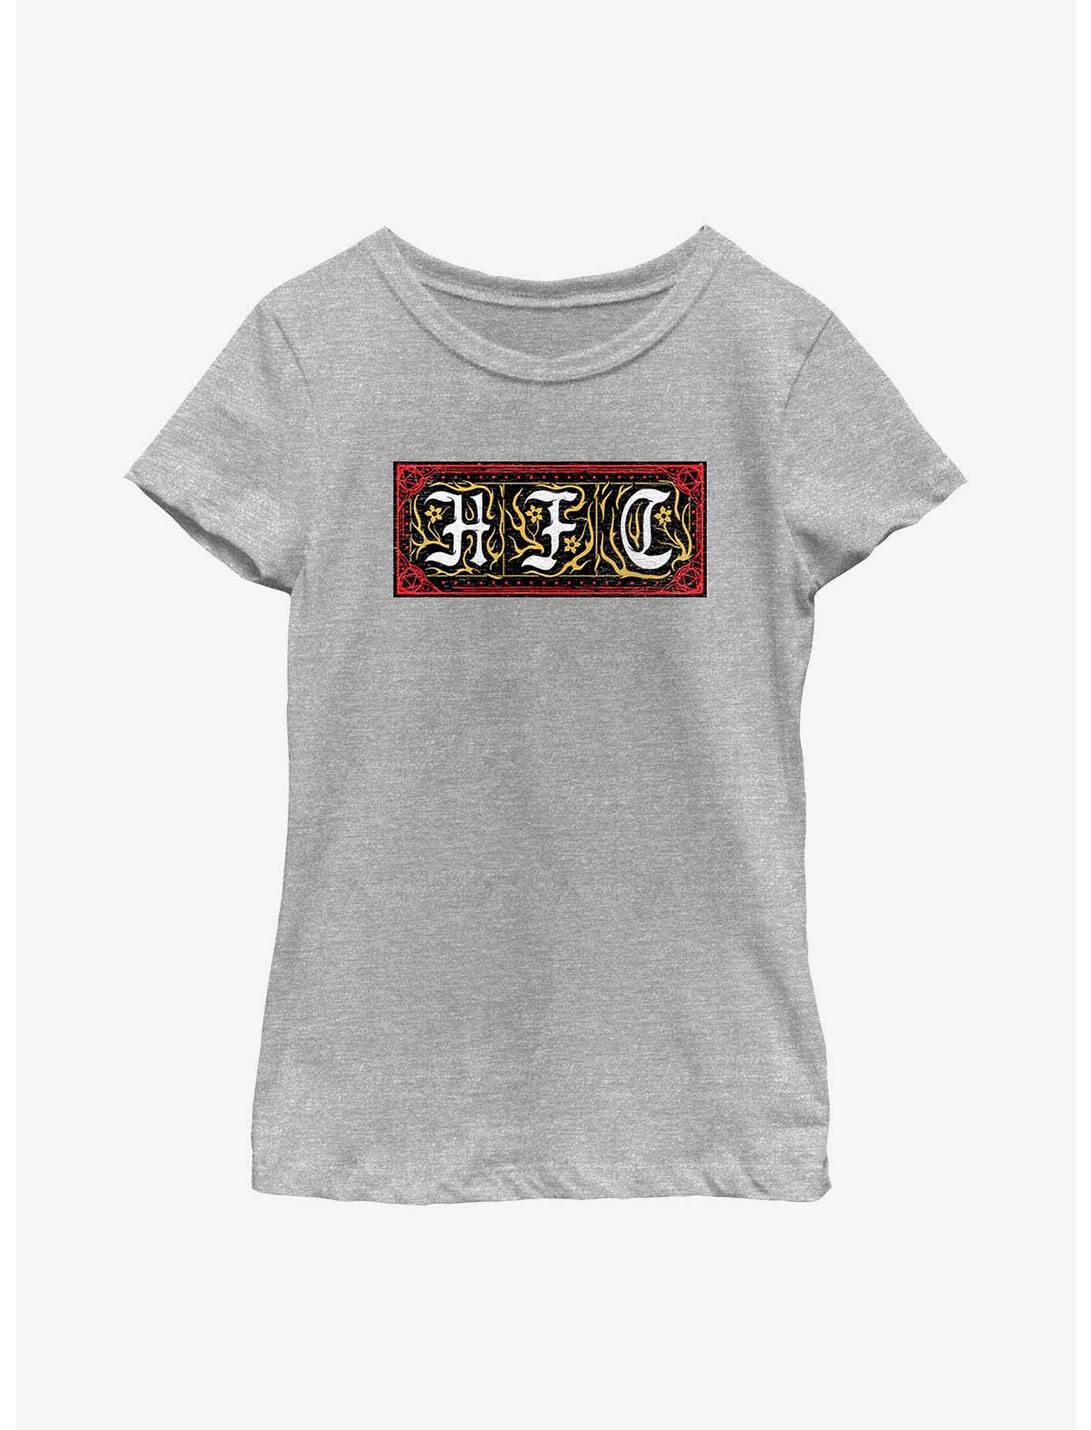 Stranger Things Hellfire Club Emblem Youth Girls T-Shirt, ATH HTR, hi-res